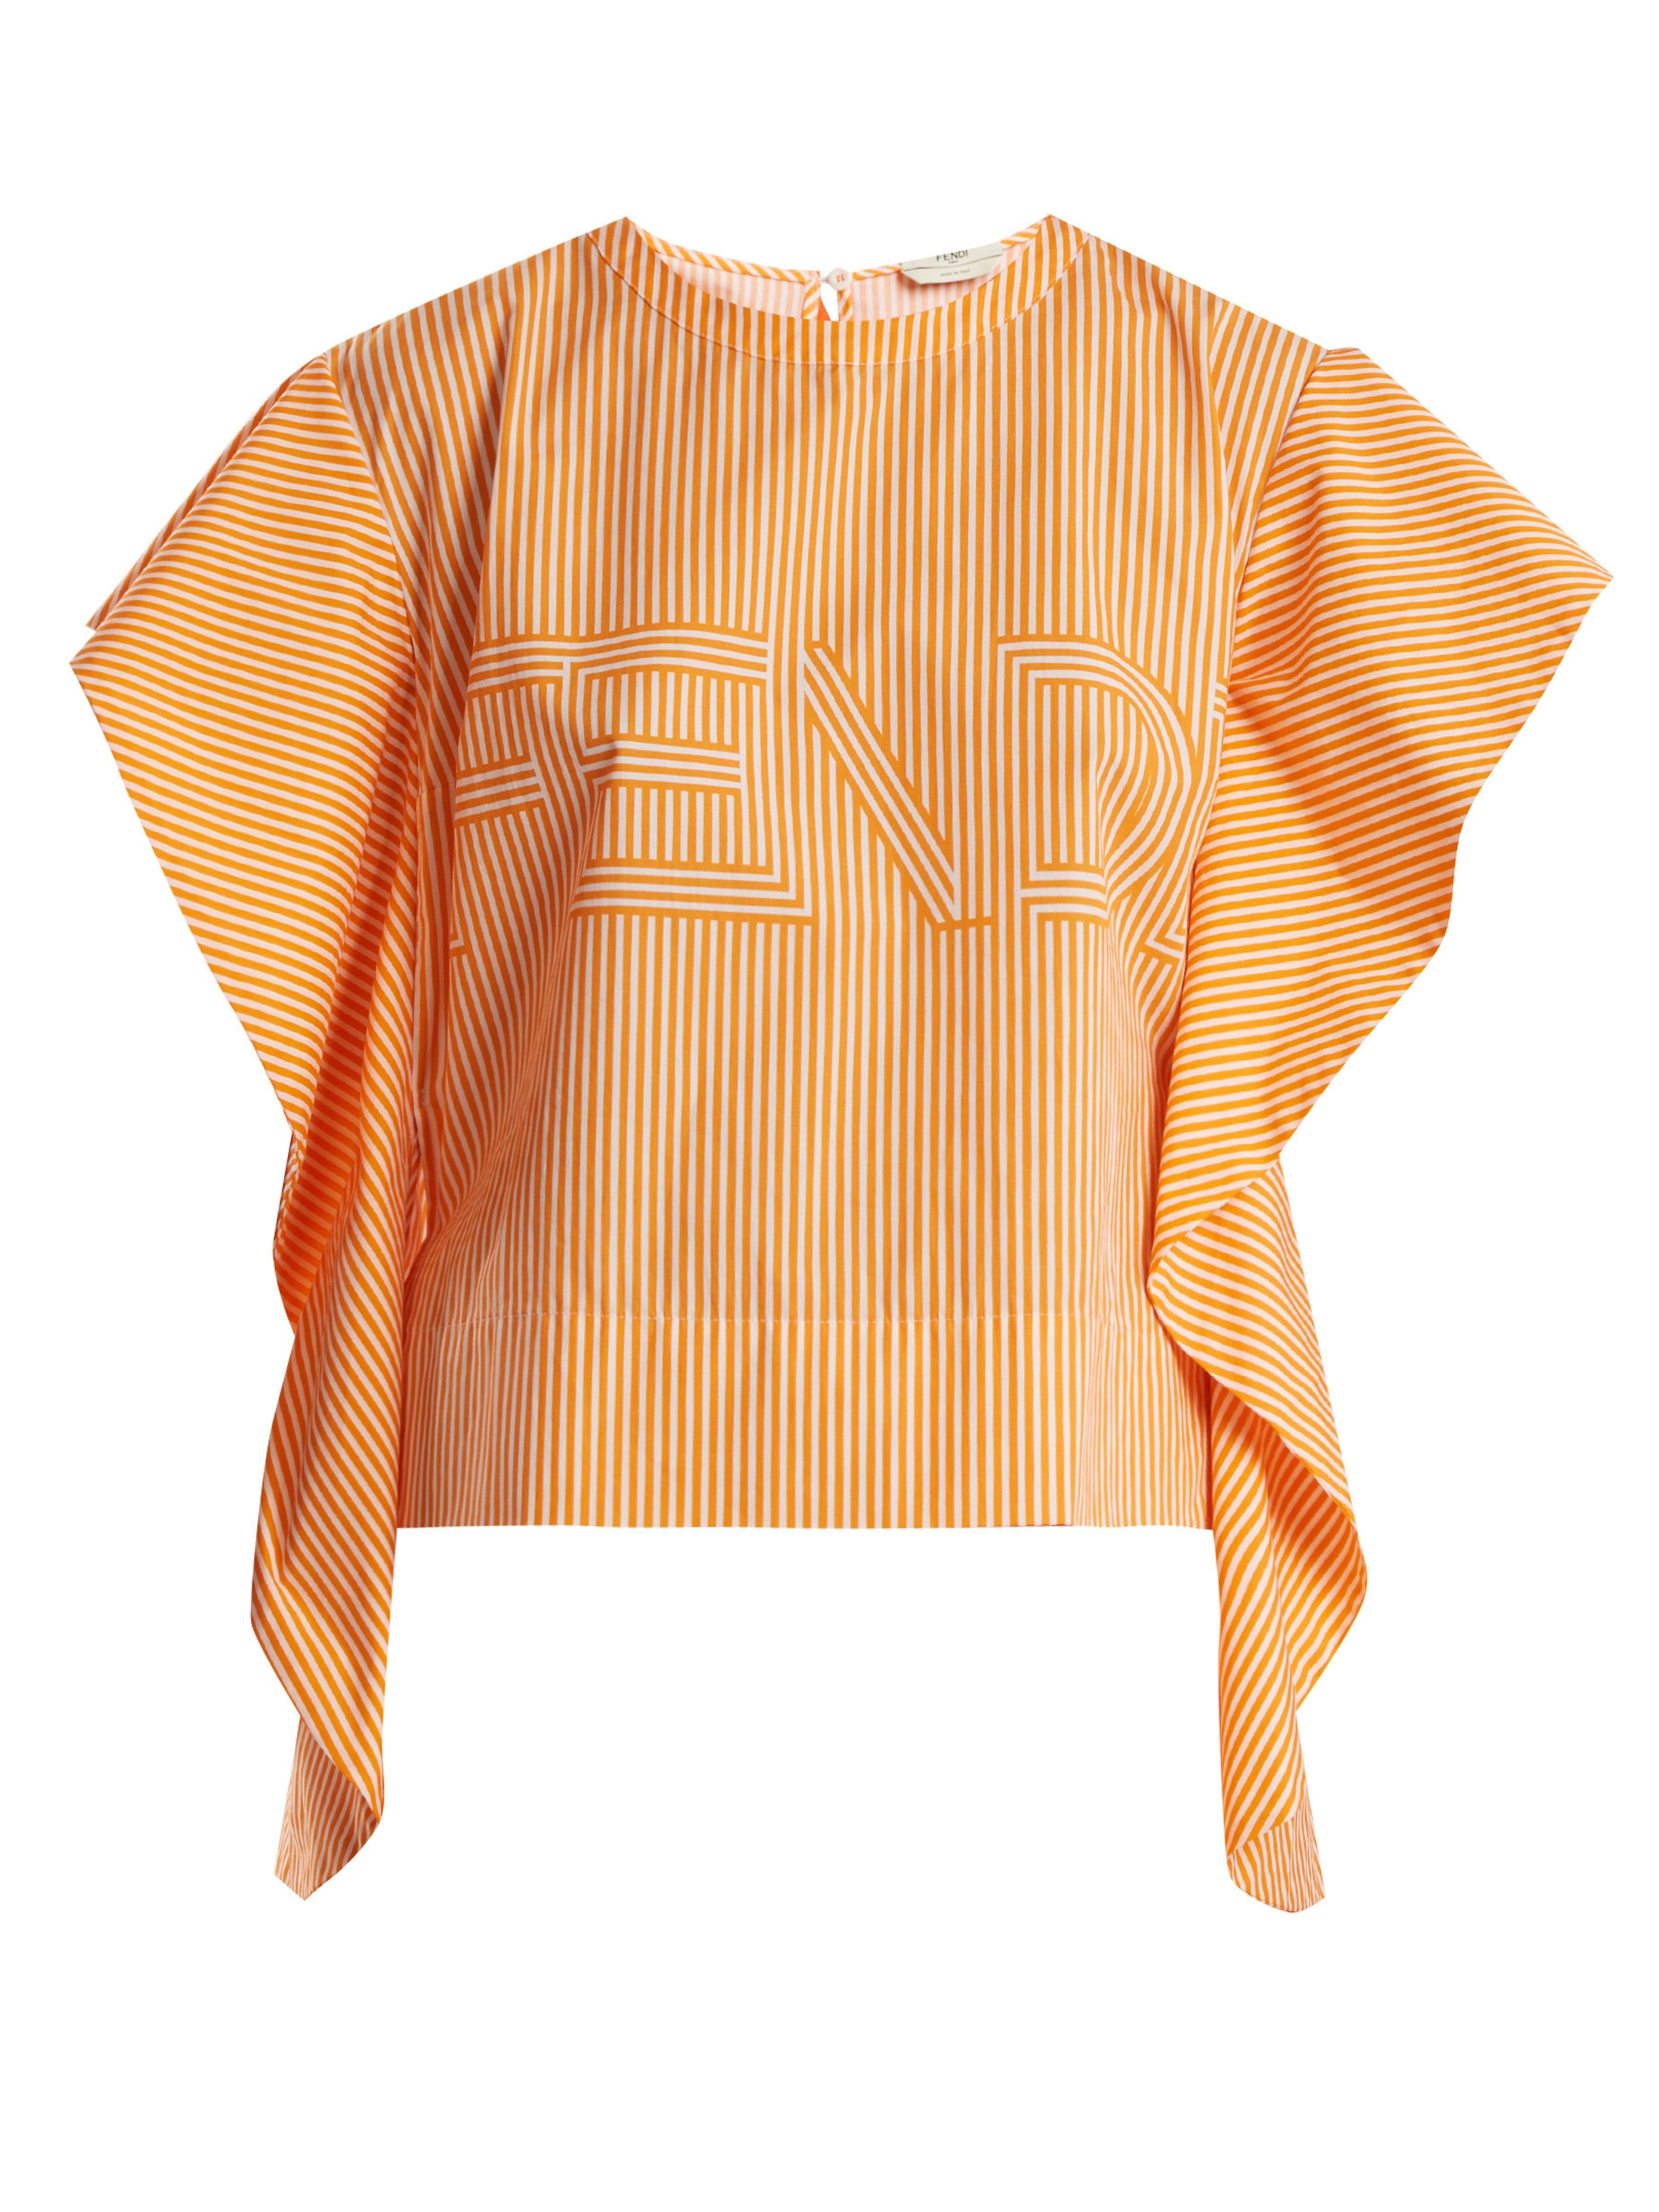 Orange Pattern Logo - Fendi Logo Print Striped Cotton Poplin Top in Orange - Lyst